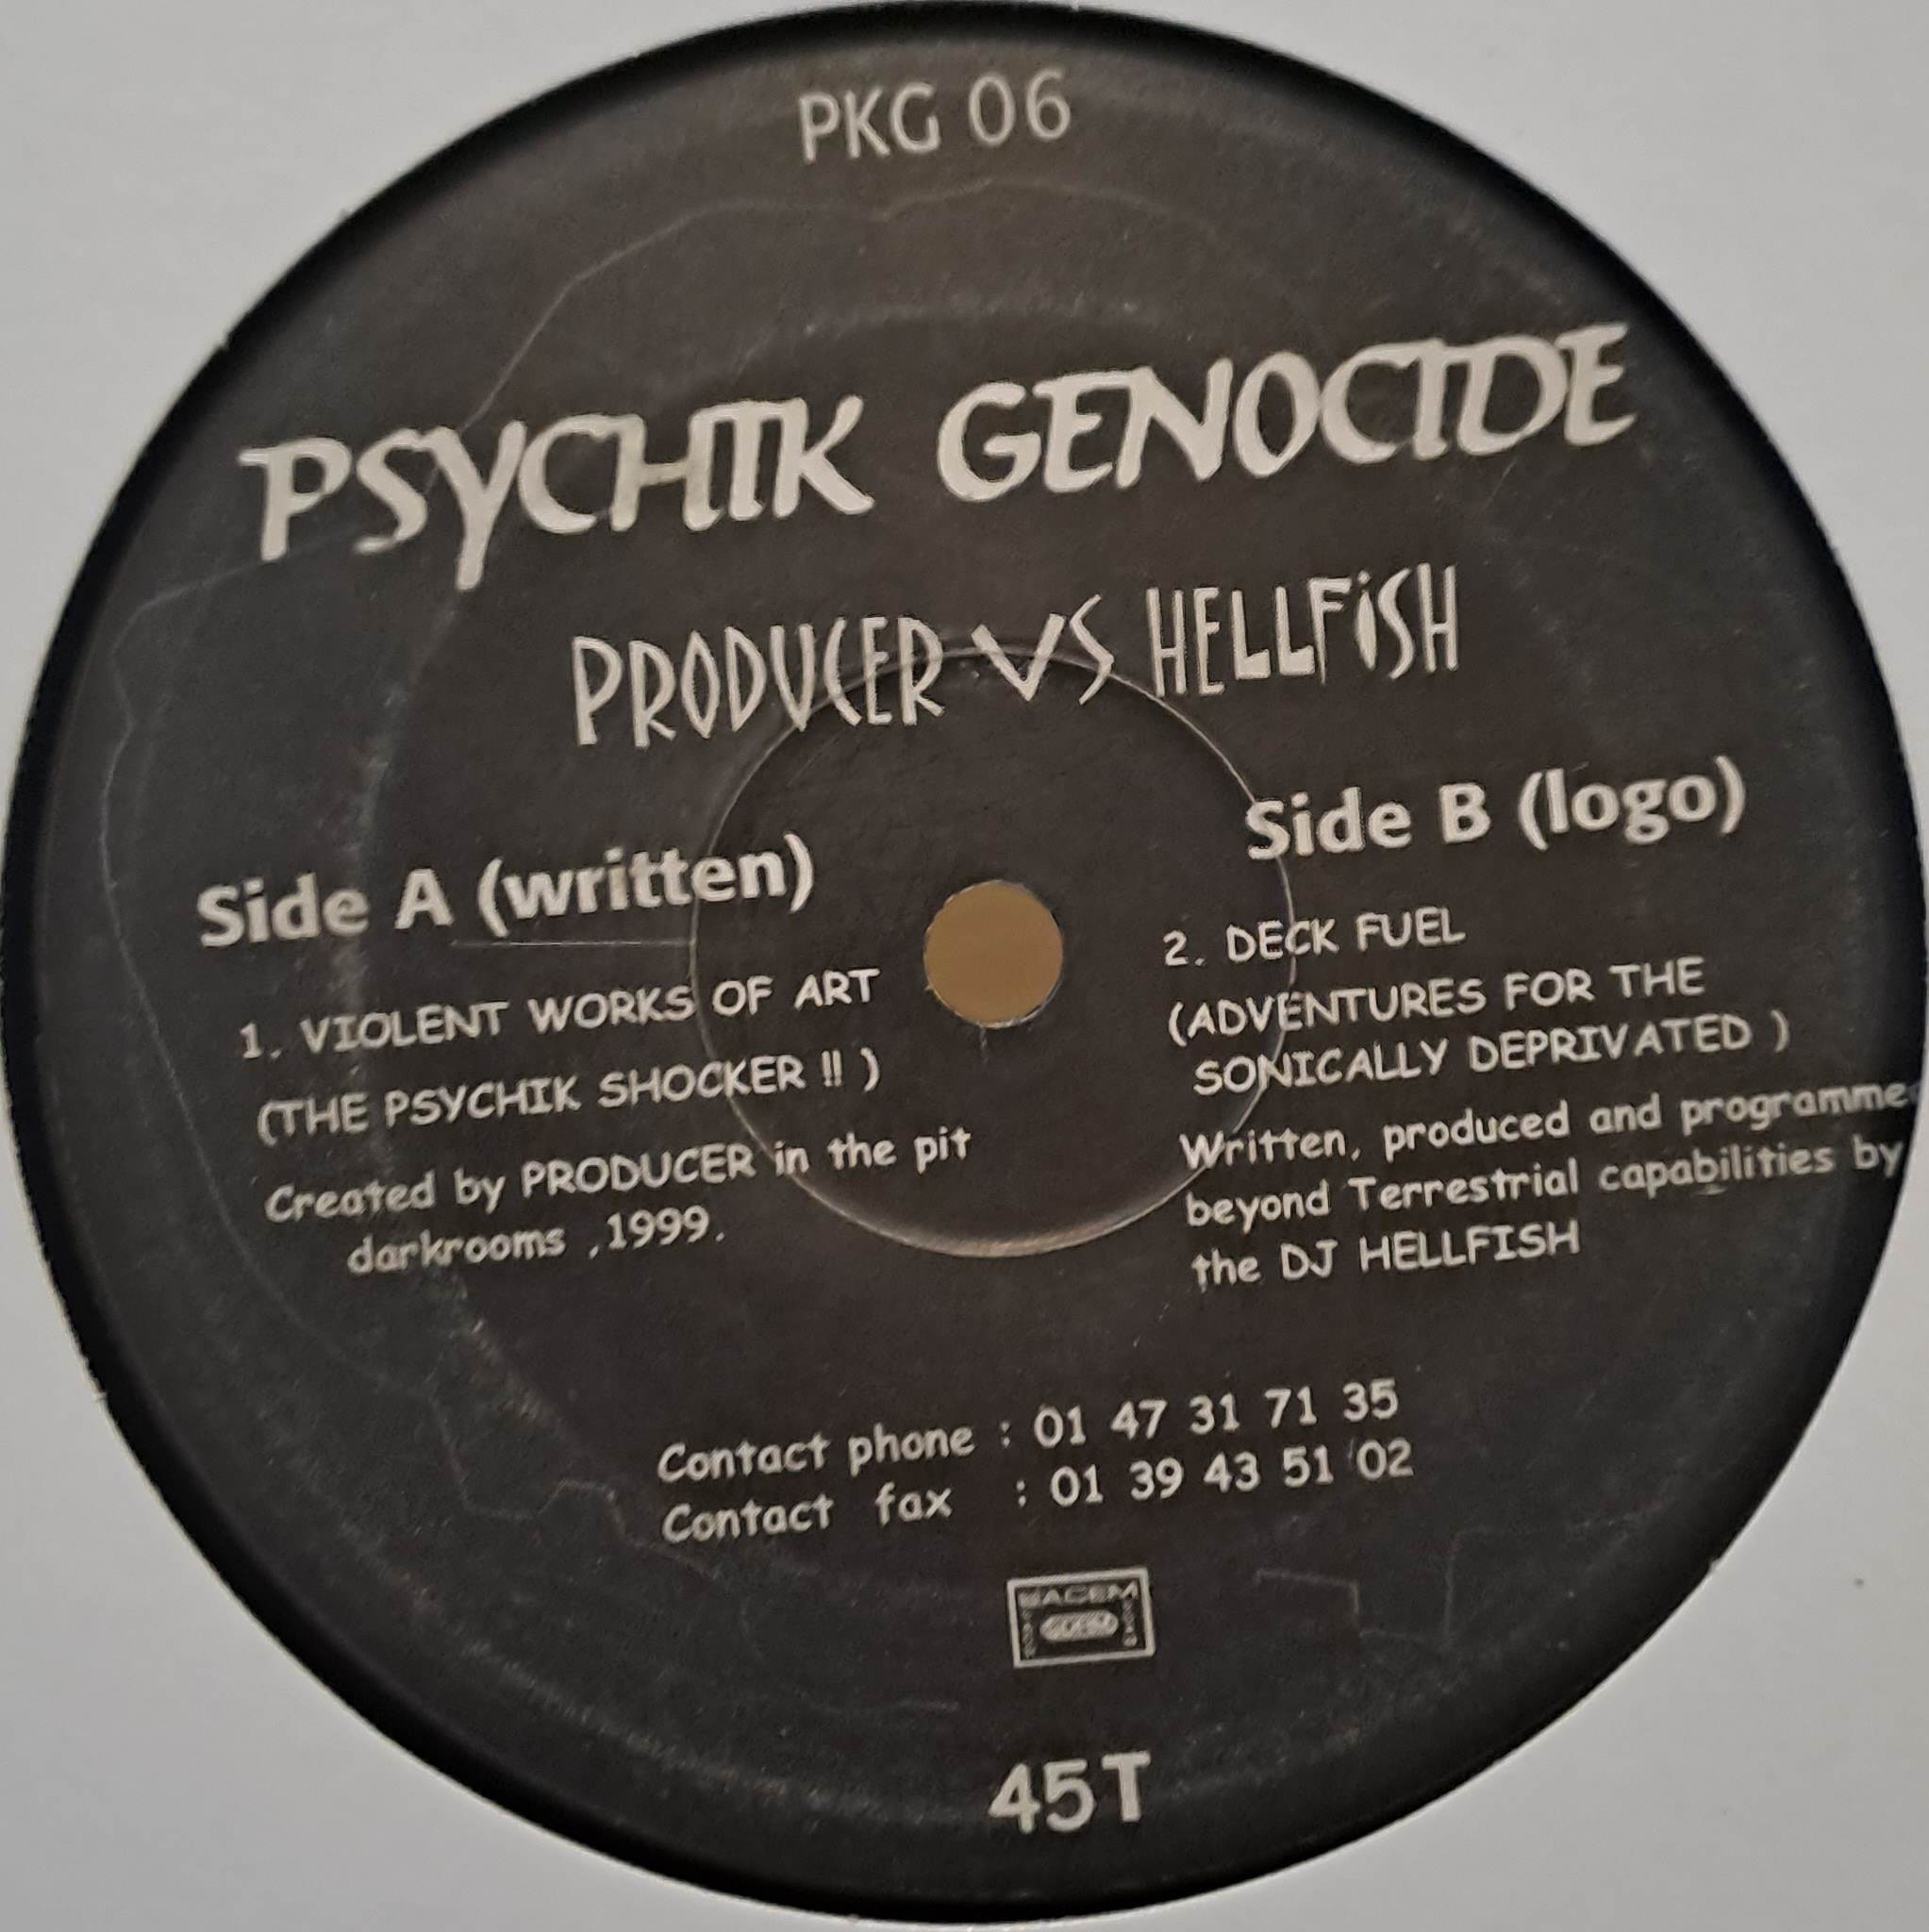 Psychik Genocide 006 - vinyle hardcore